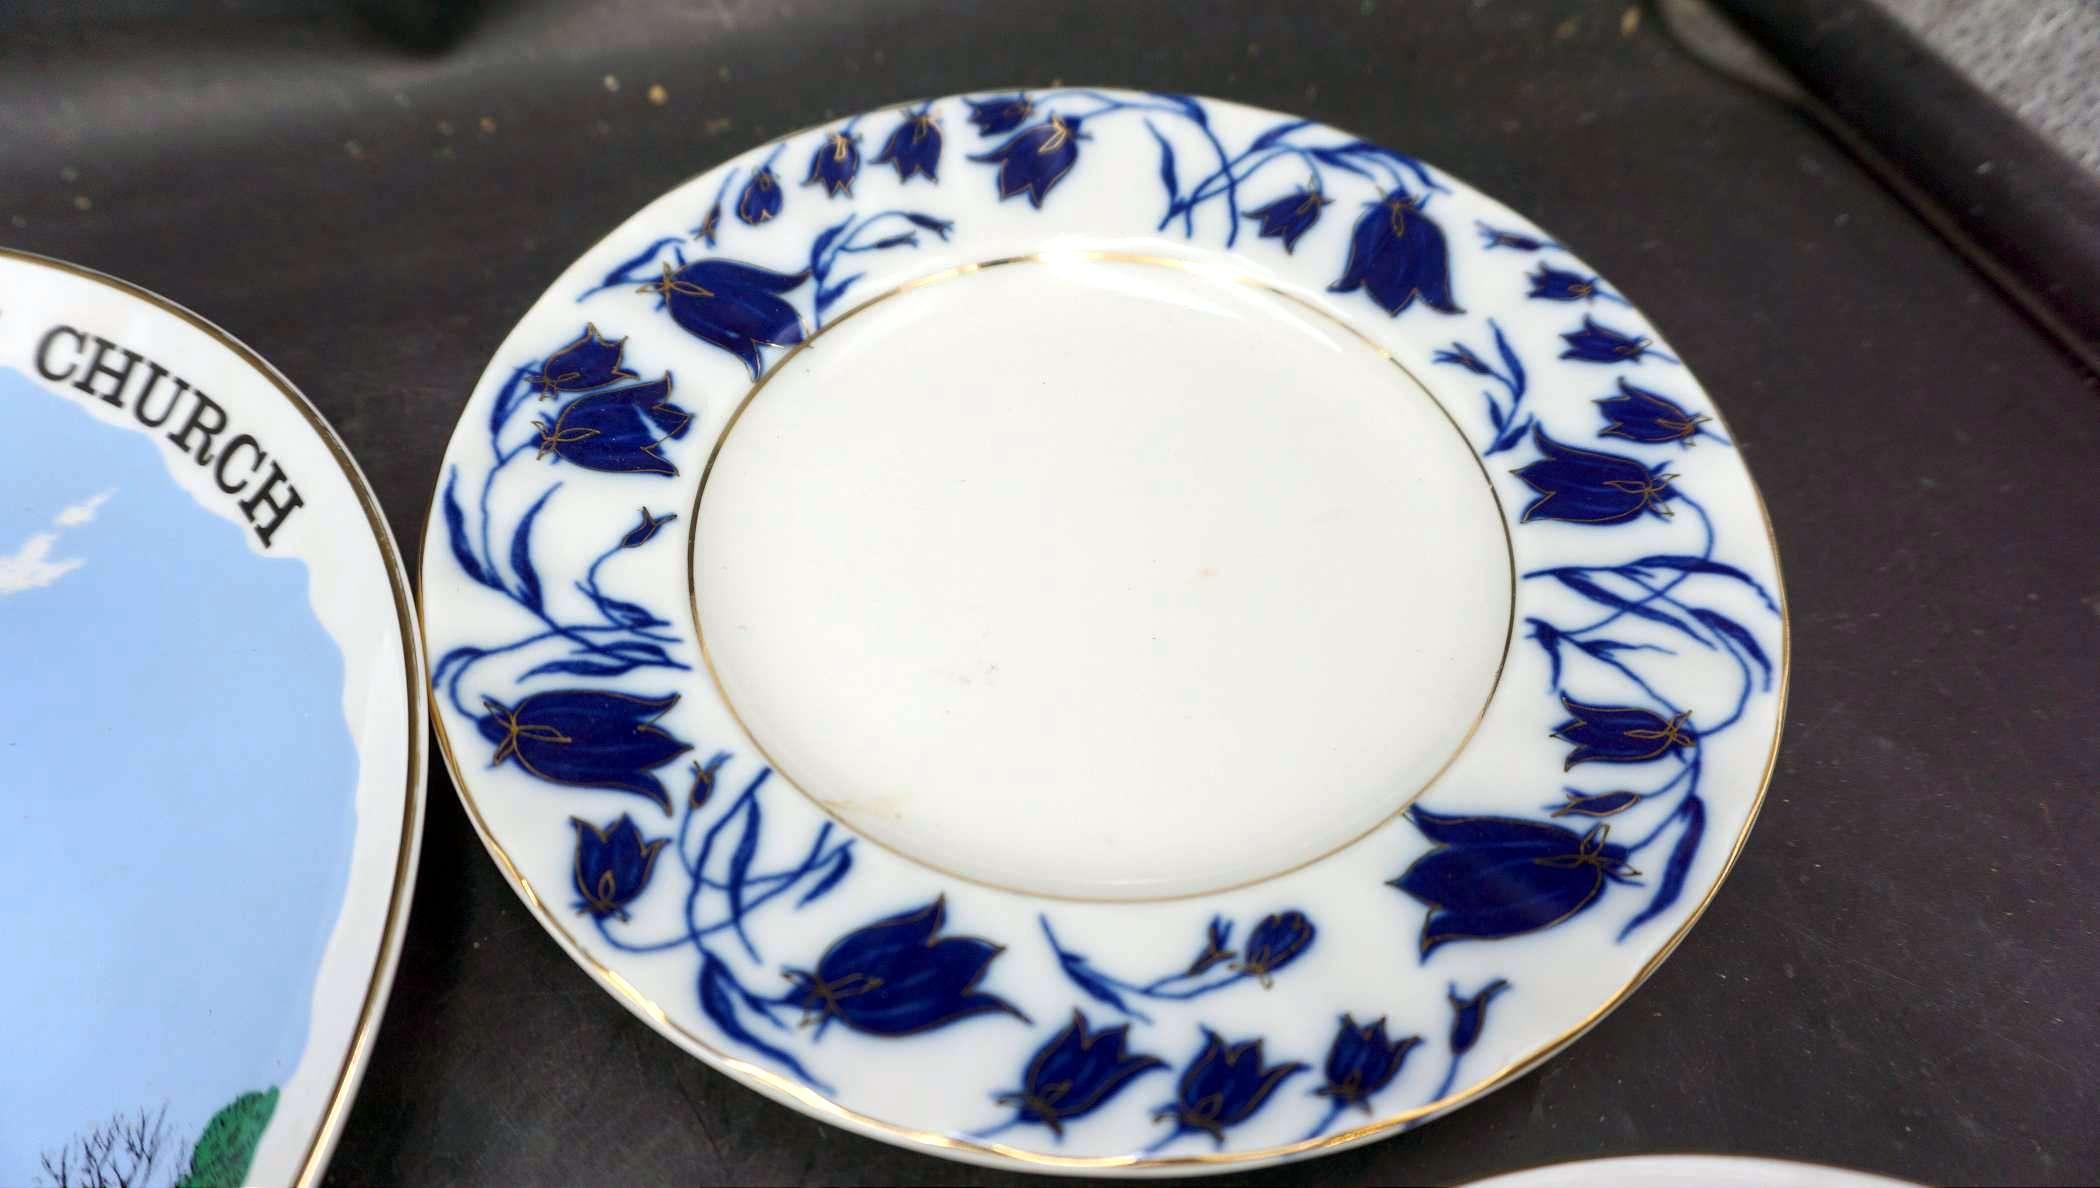 Glass Leaf Bowl, China Plates & Decorative Plates